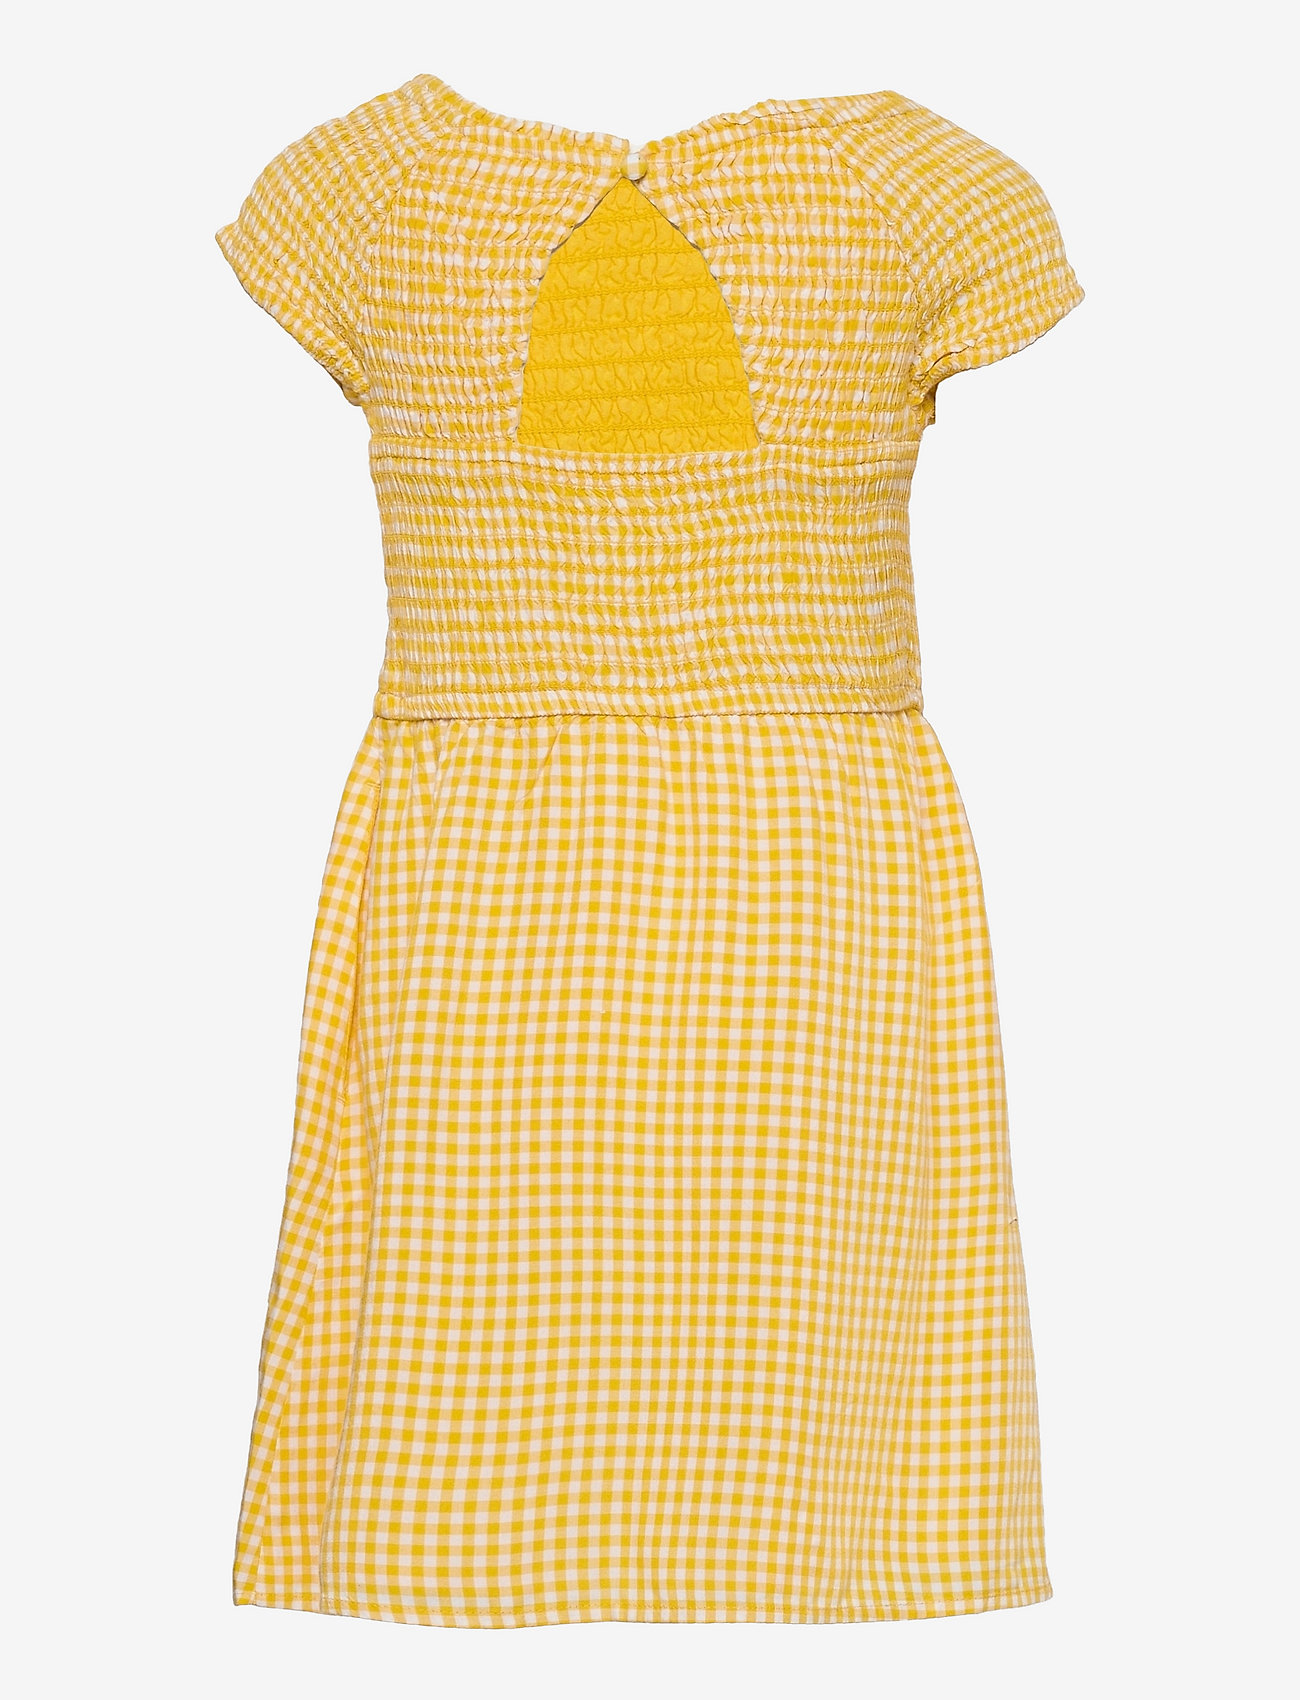 Abercrombie & Fitch - kids GIRLS DRESSES - short-sleeved casual dresses - light yellow patt - 1